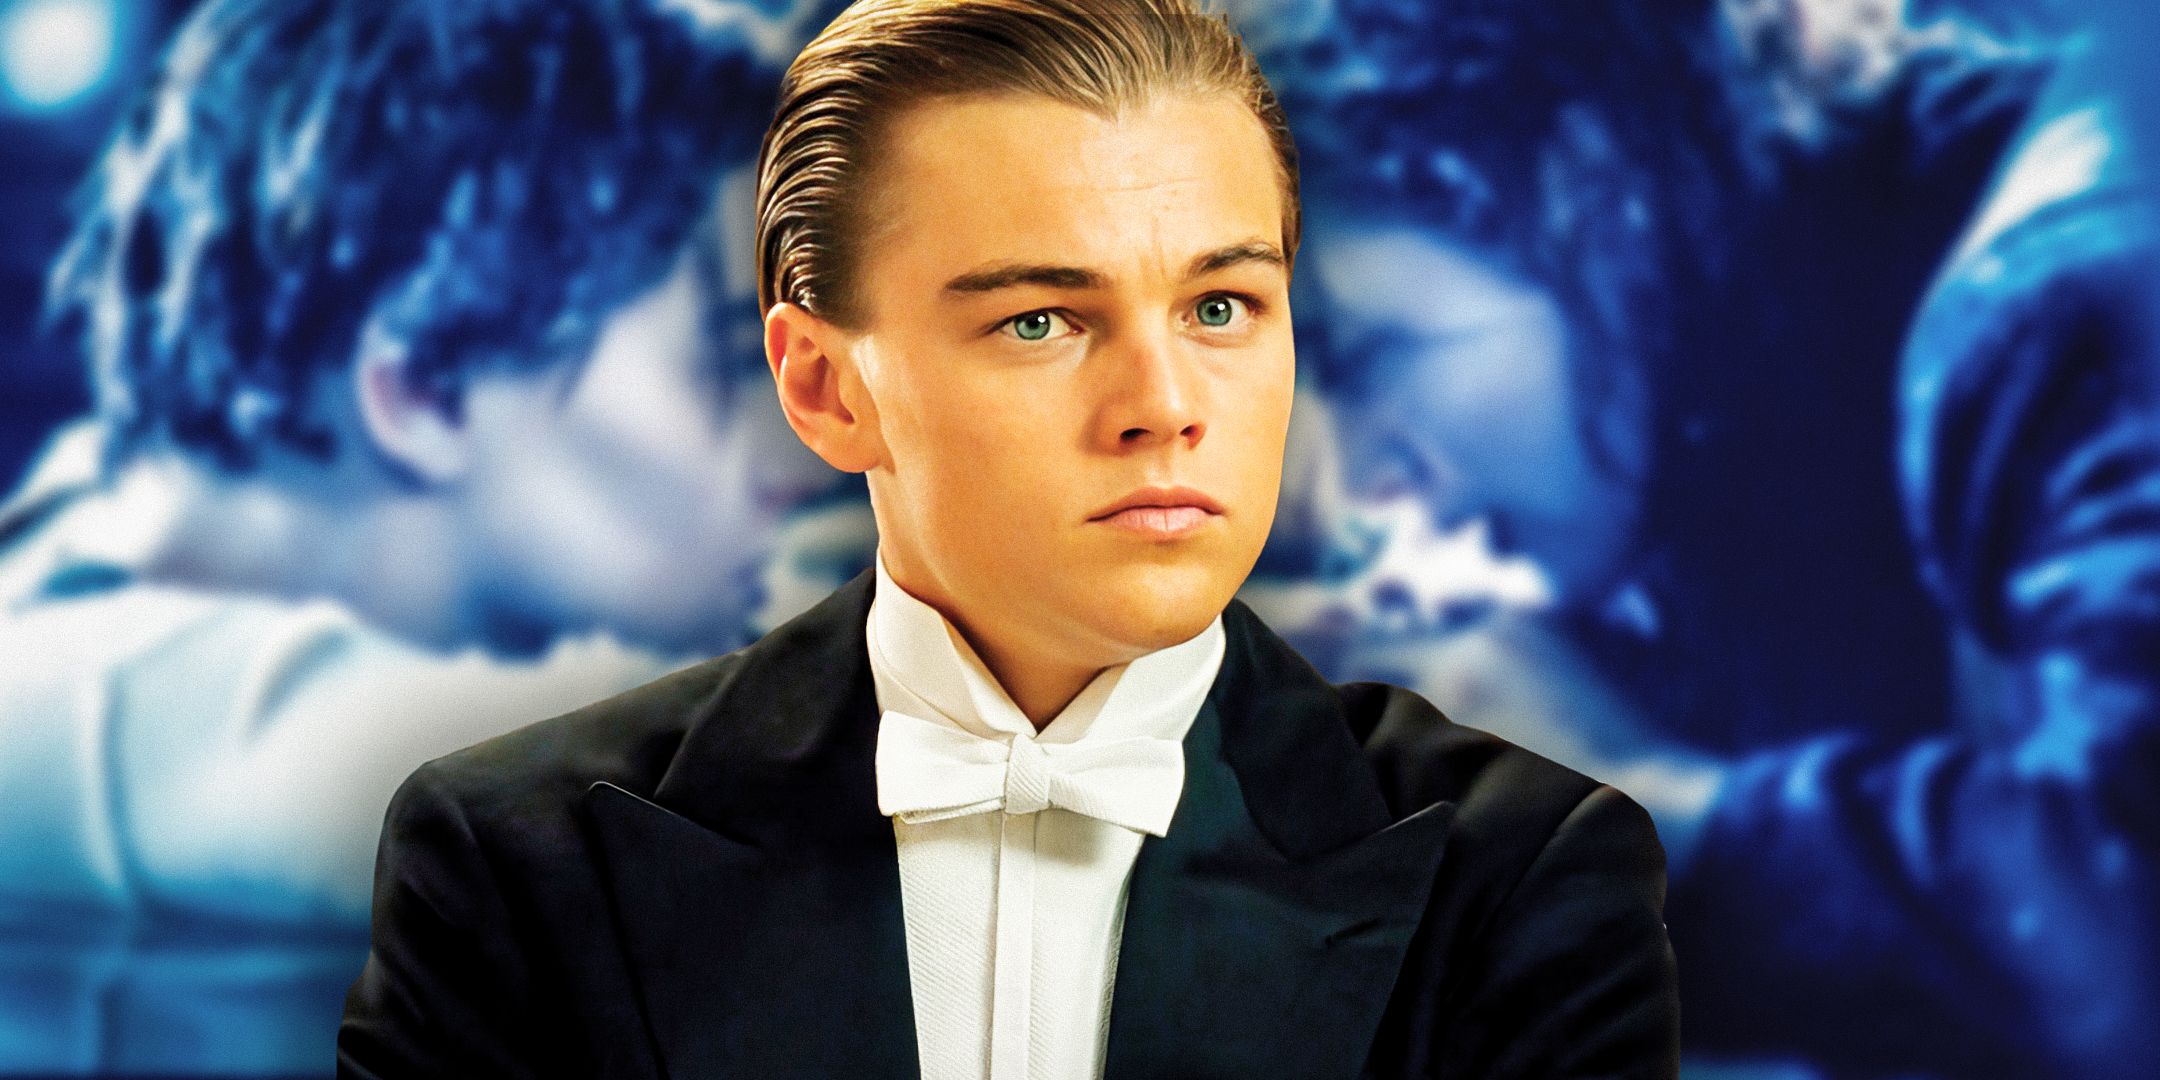 Leonardo DiCaprio as Jack Dawson in Titanic.